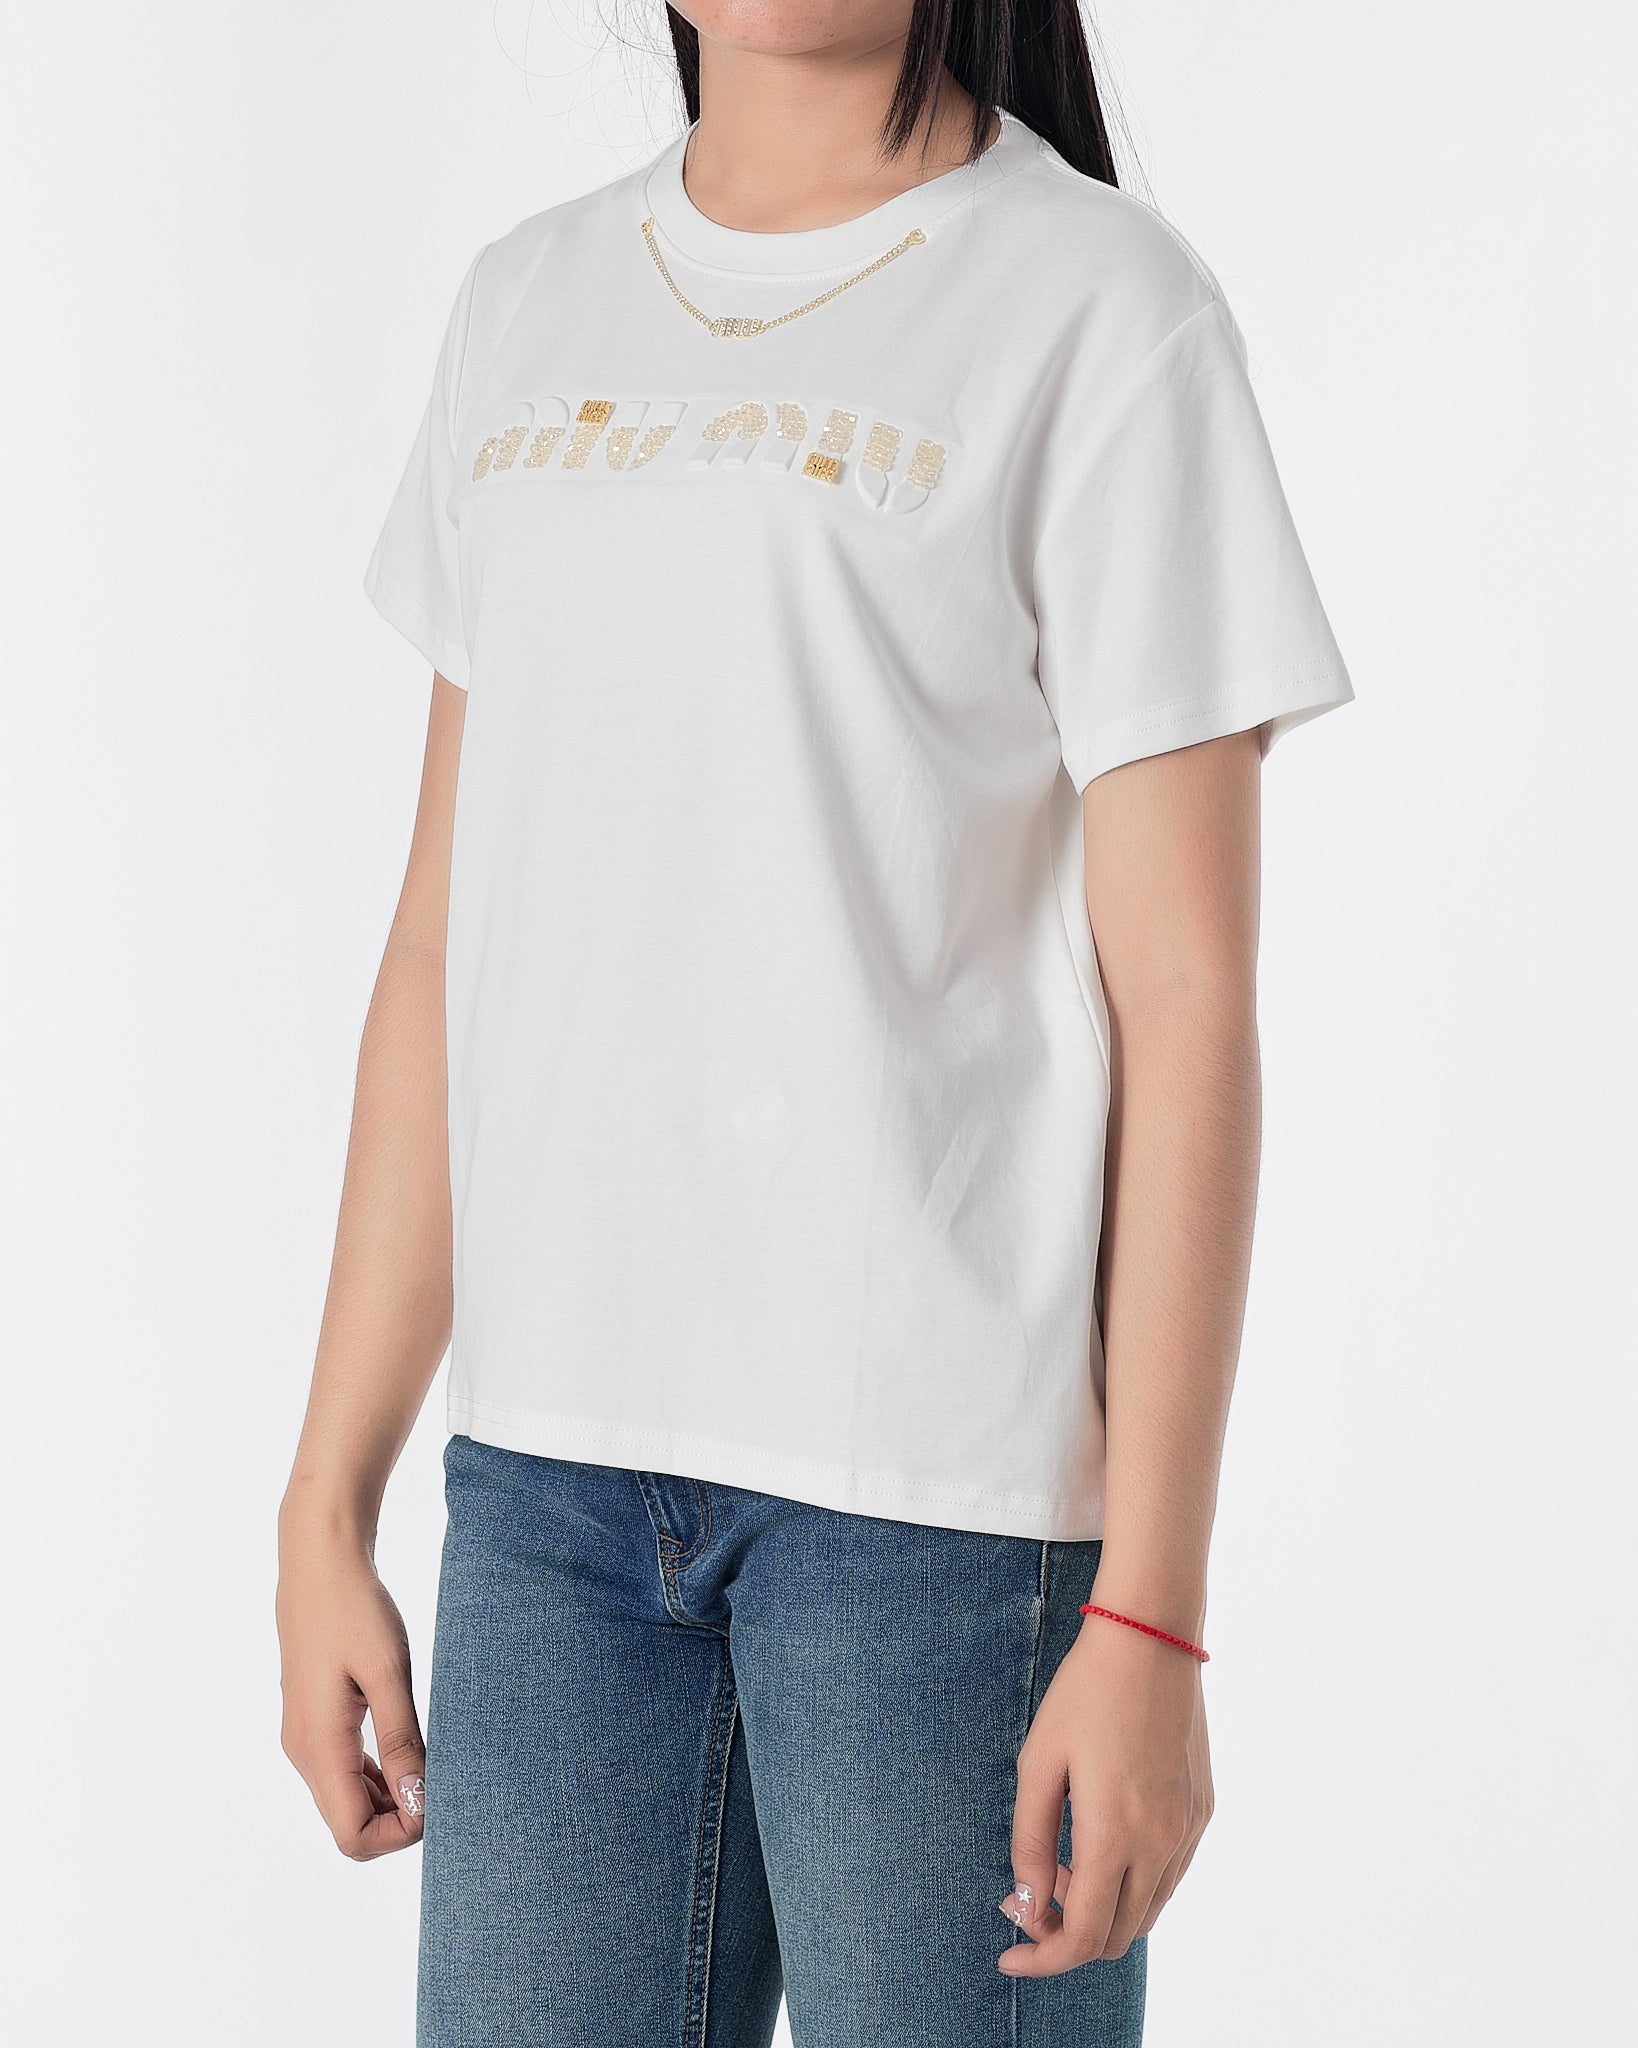 MIU Rhinestone Neck Chain Lady White T-Shirt 27.90